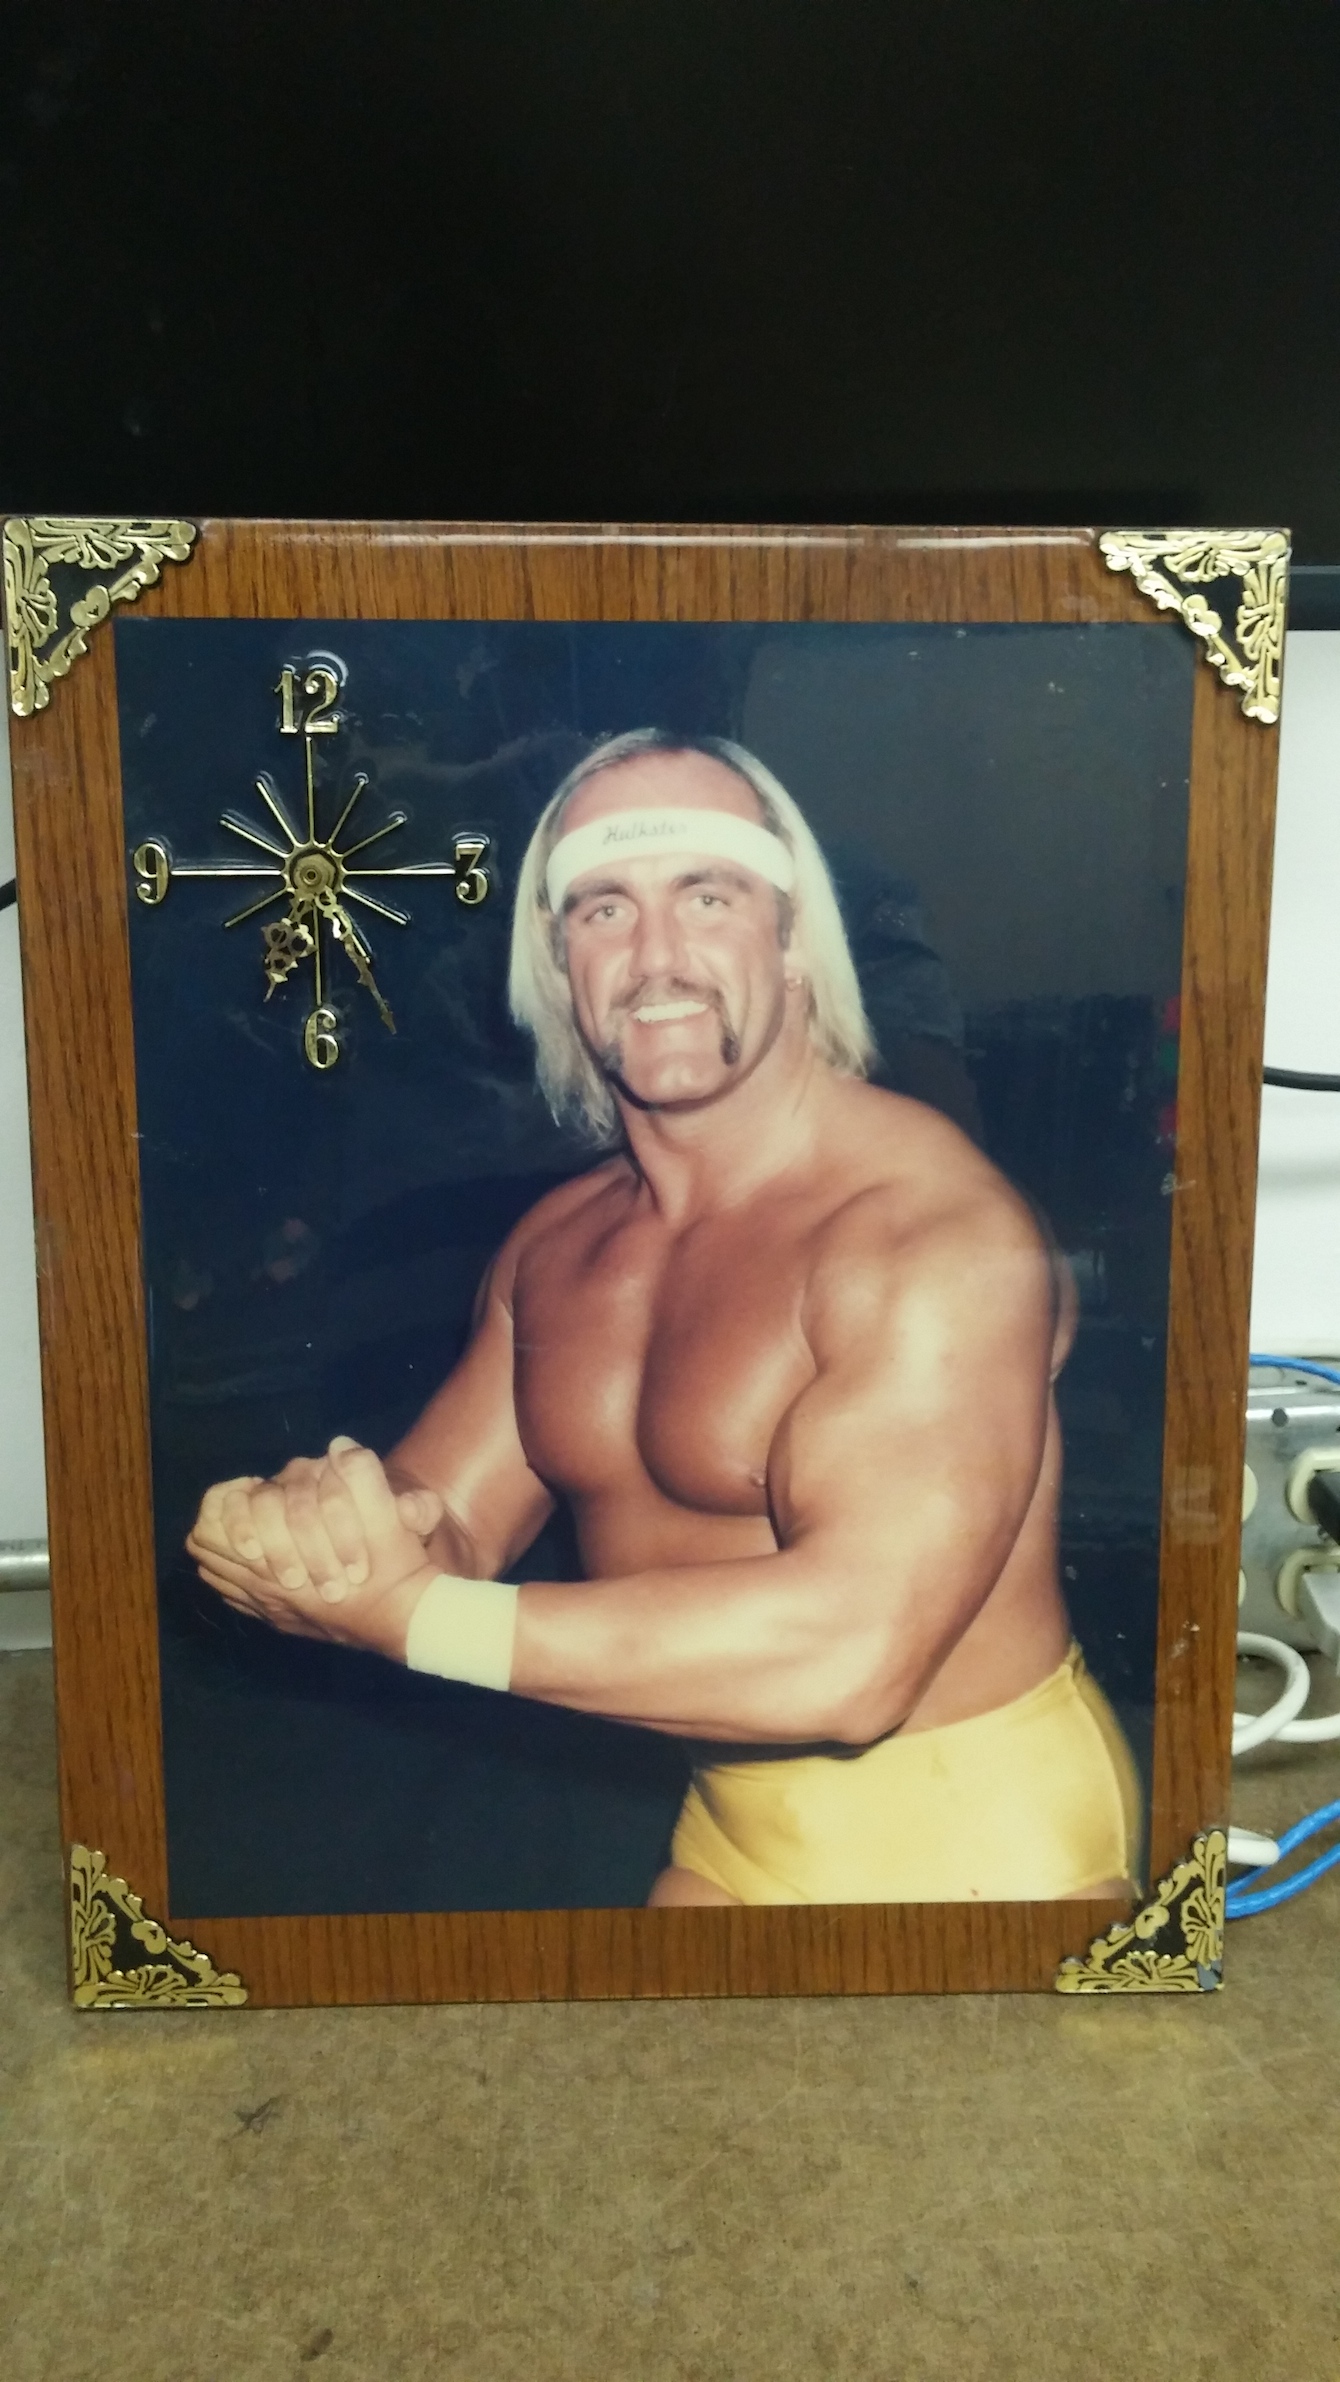 Hulk Hogan early photo clock